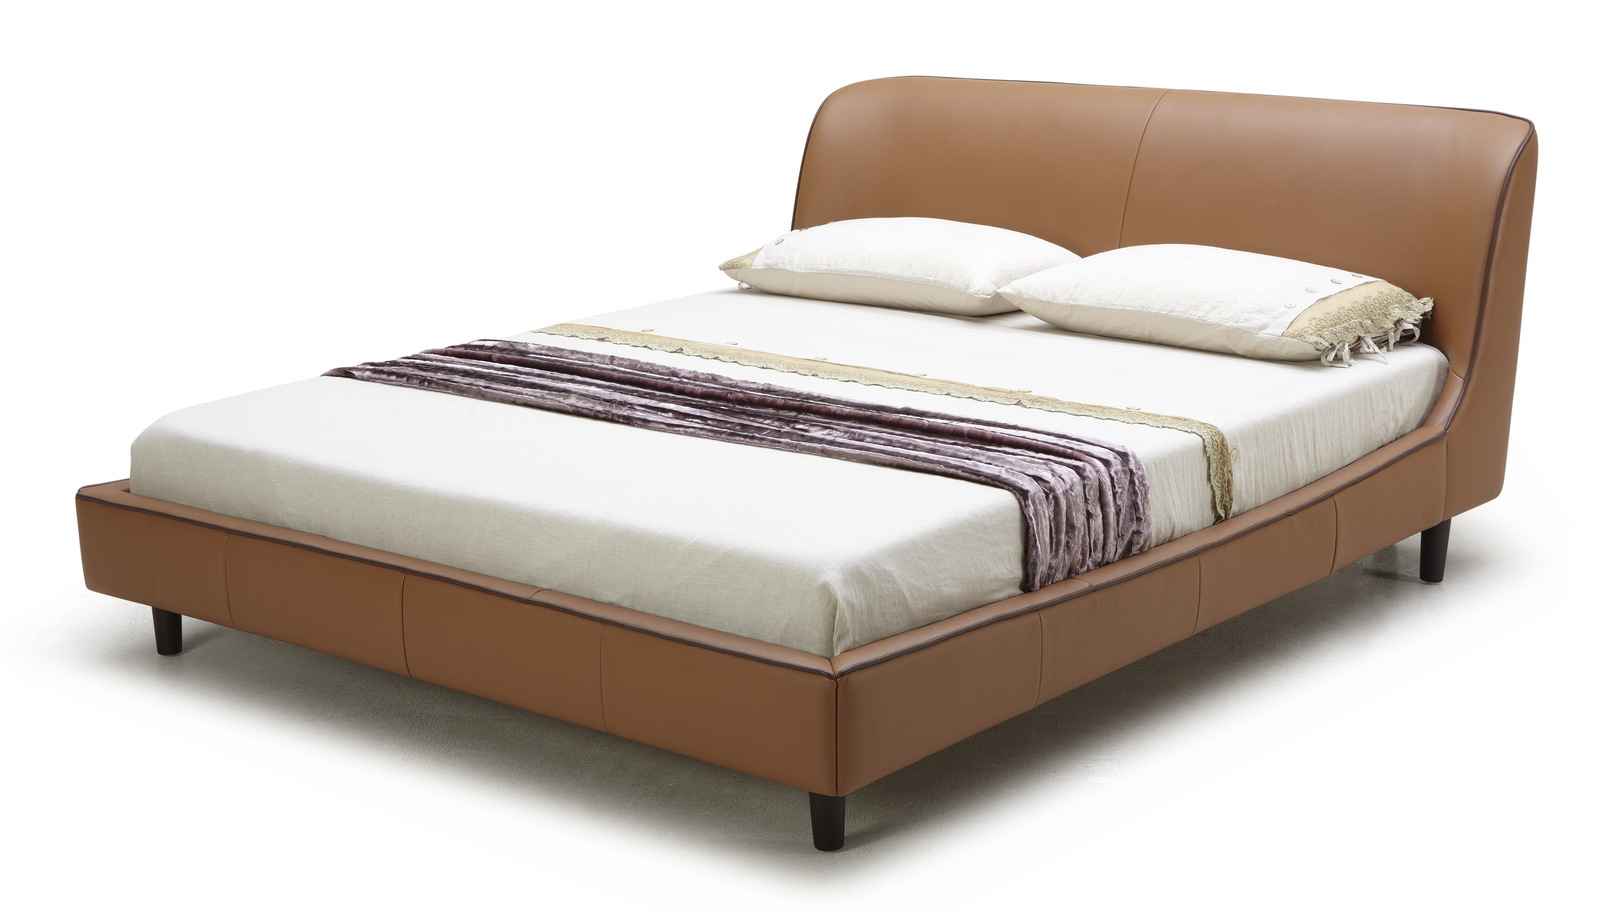 Leather Bed Furniture Brisbane, King Leather Bed